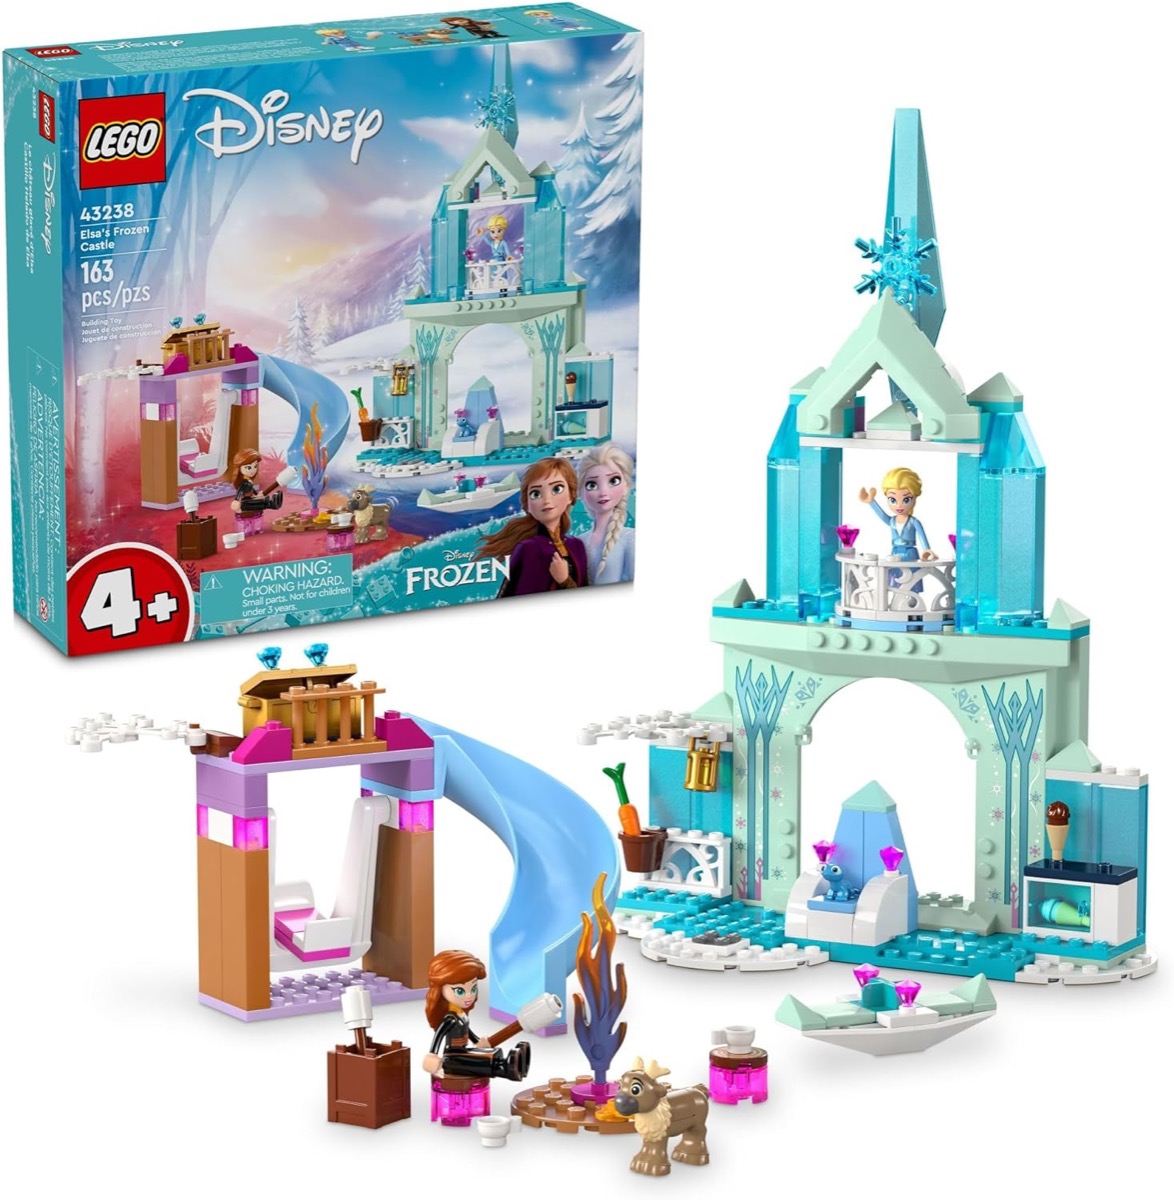 A LEGO version of Elsa’s Princess Castle from "Frozen"